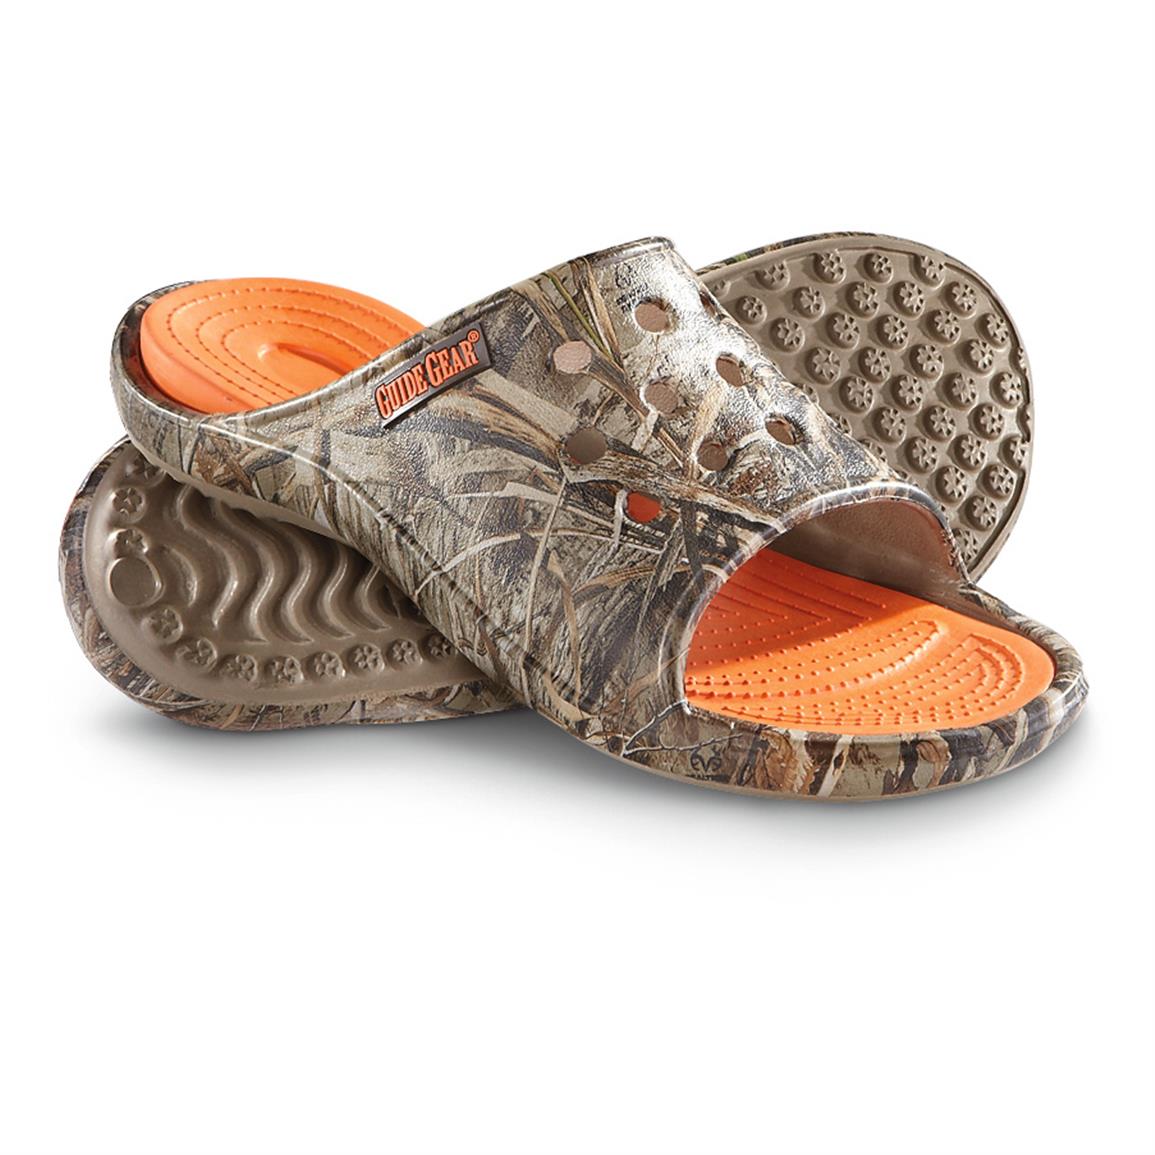 realtree sandals